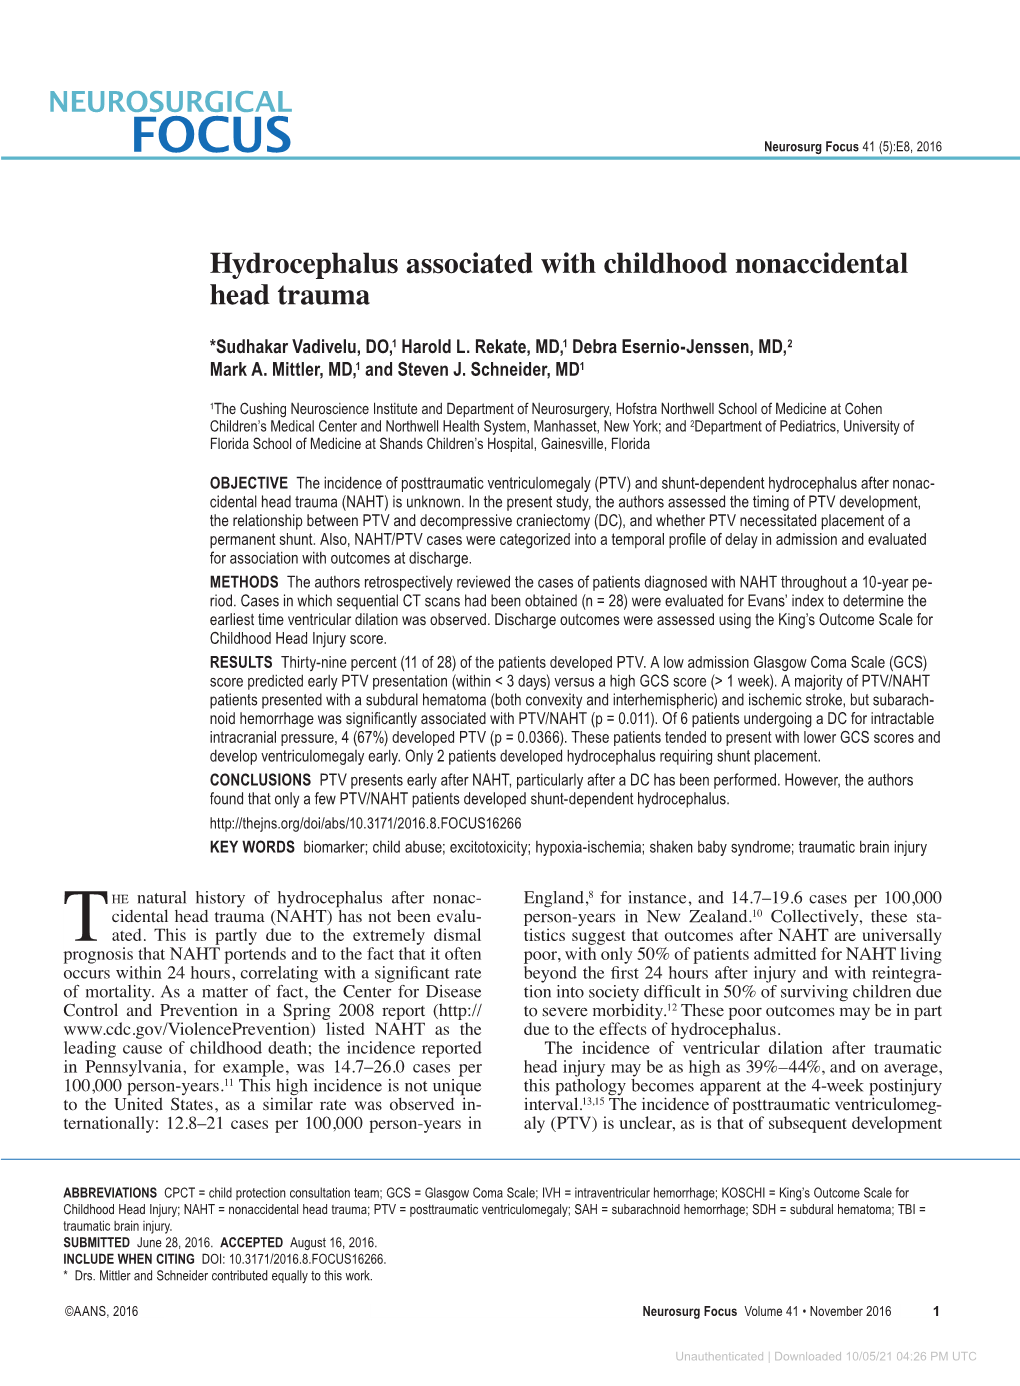 Hydrocephalus Associated with Childhood Nonaccidental Head Trauma